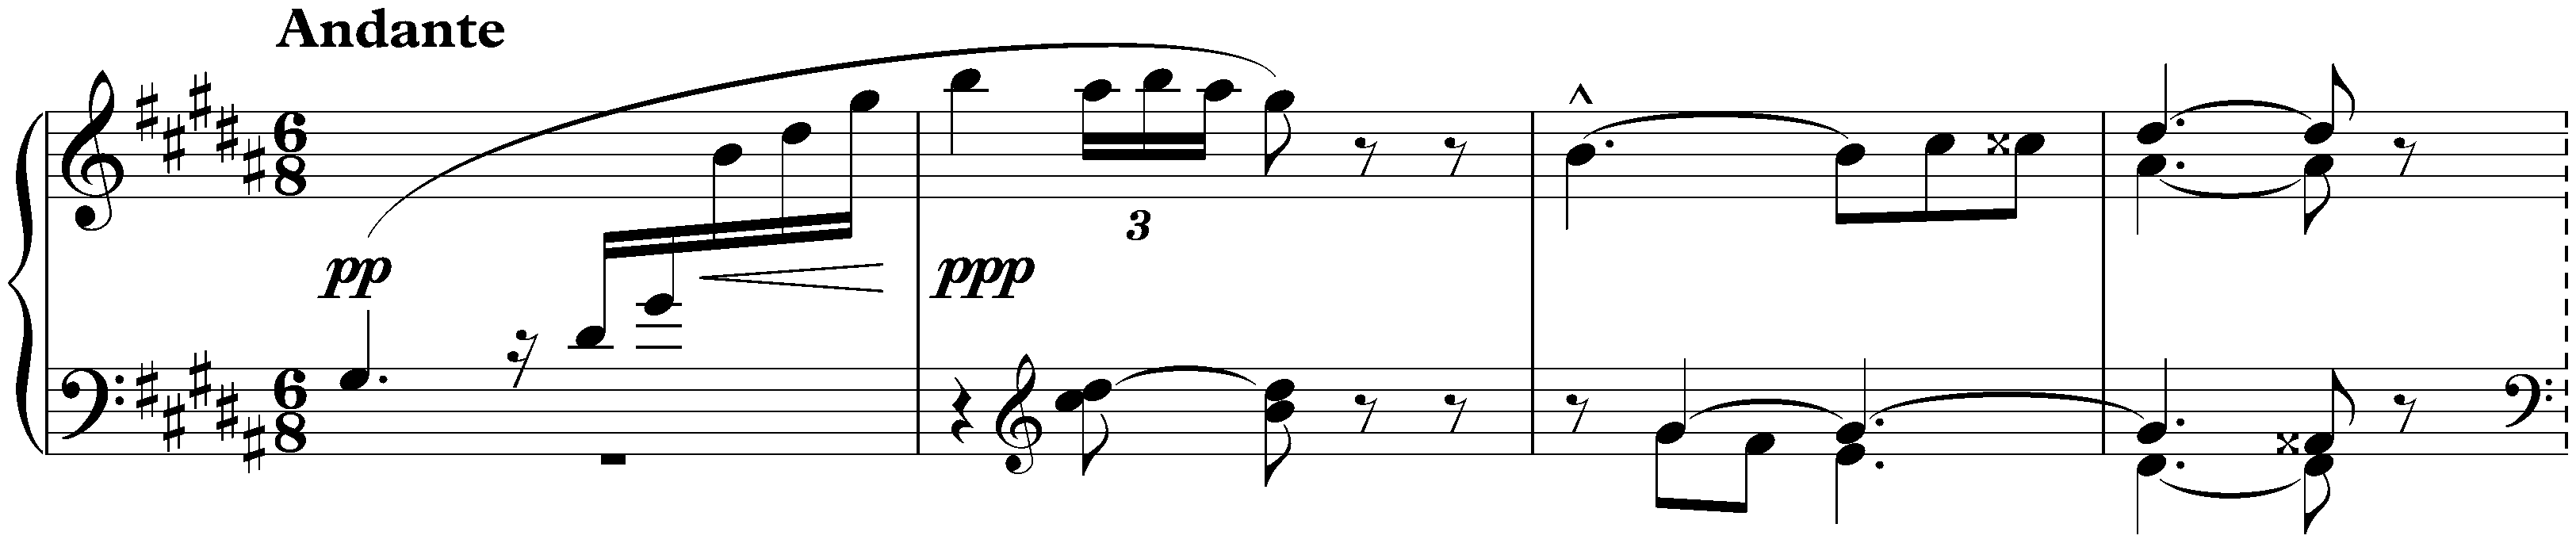 Sonate-fantaisie in G-sharp minor, WoO 6